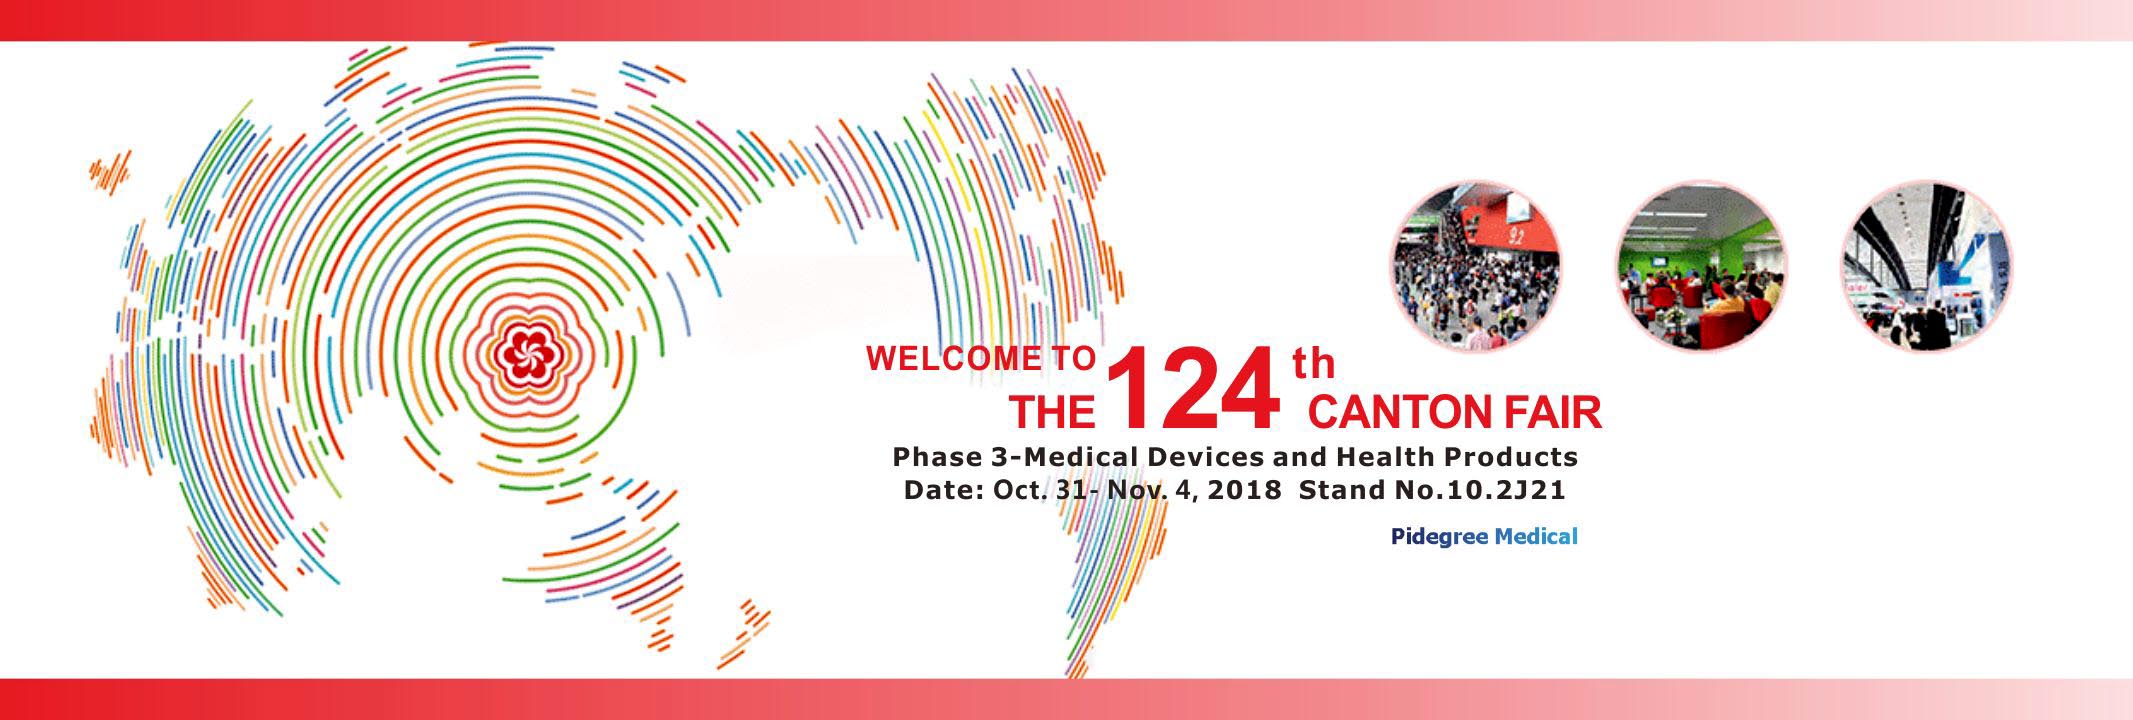 Pidegree Medical invites you to meet at 124th Canton Fair